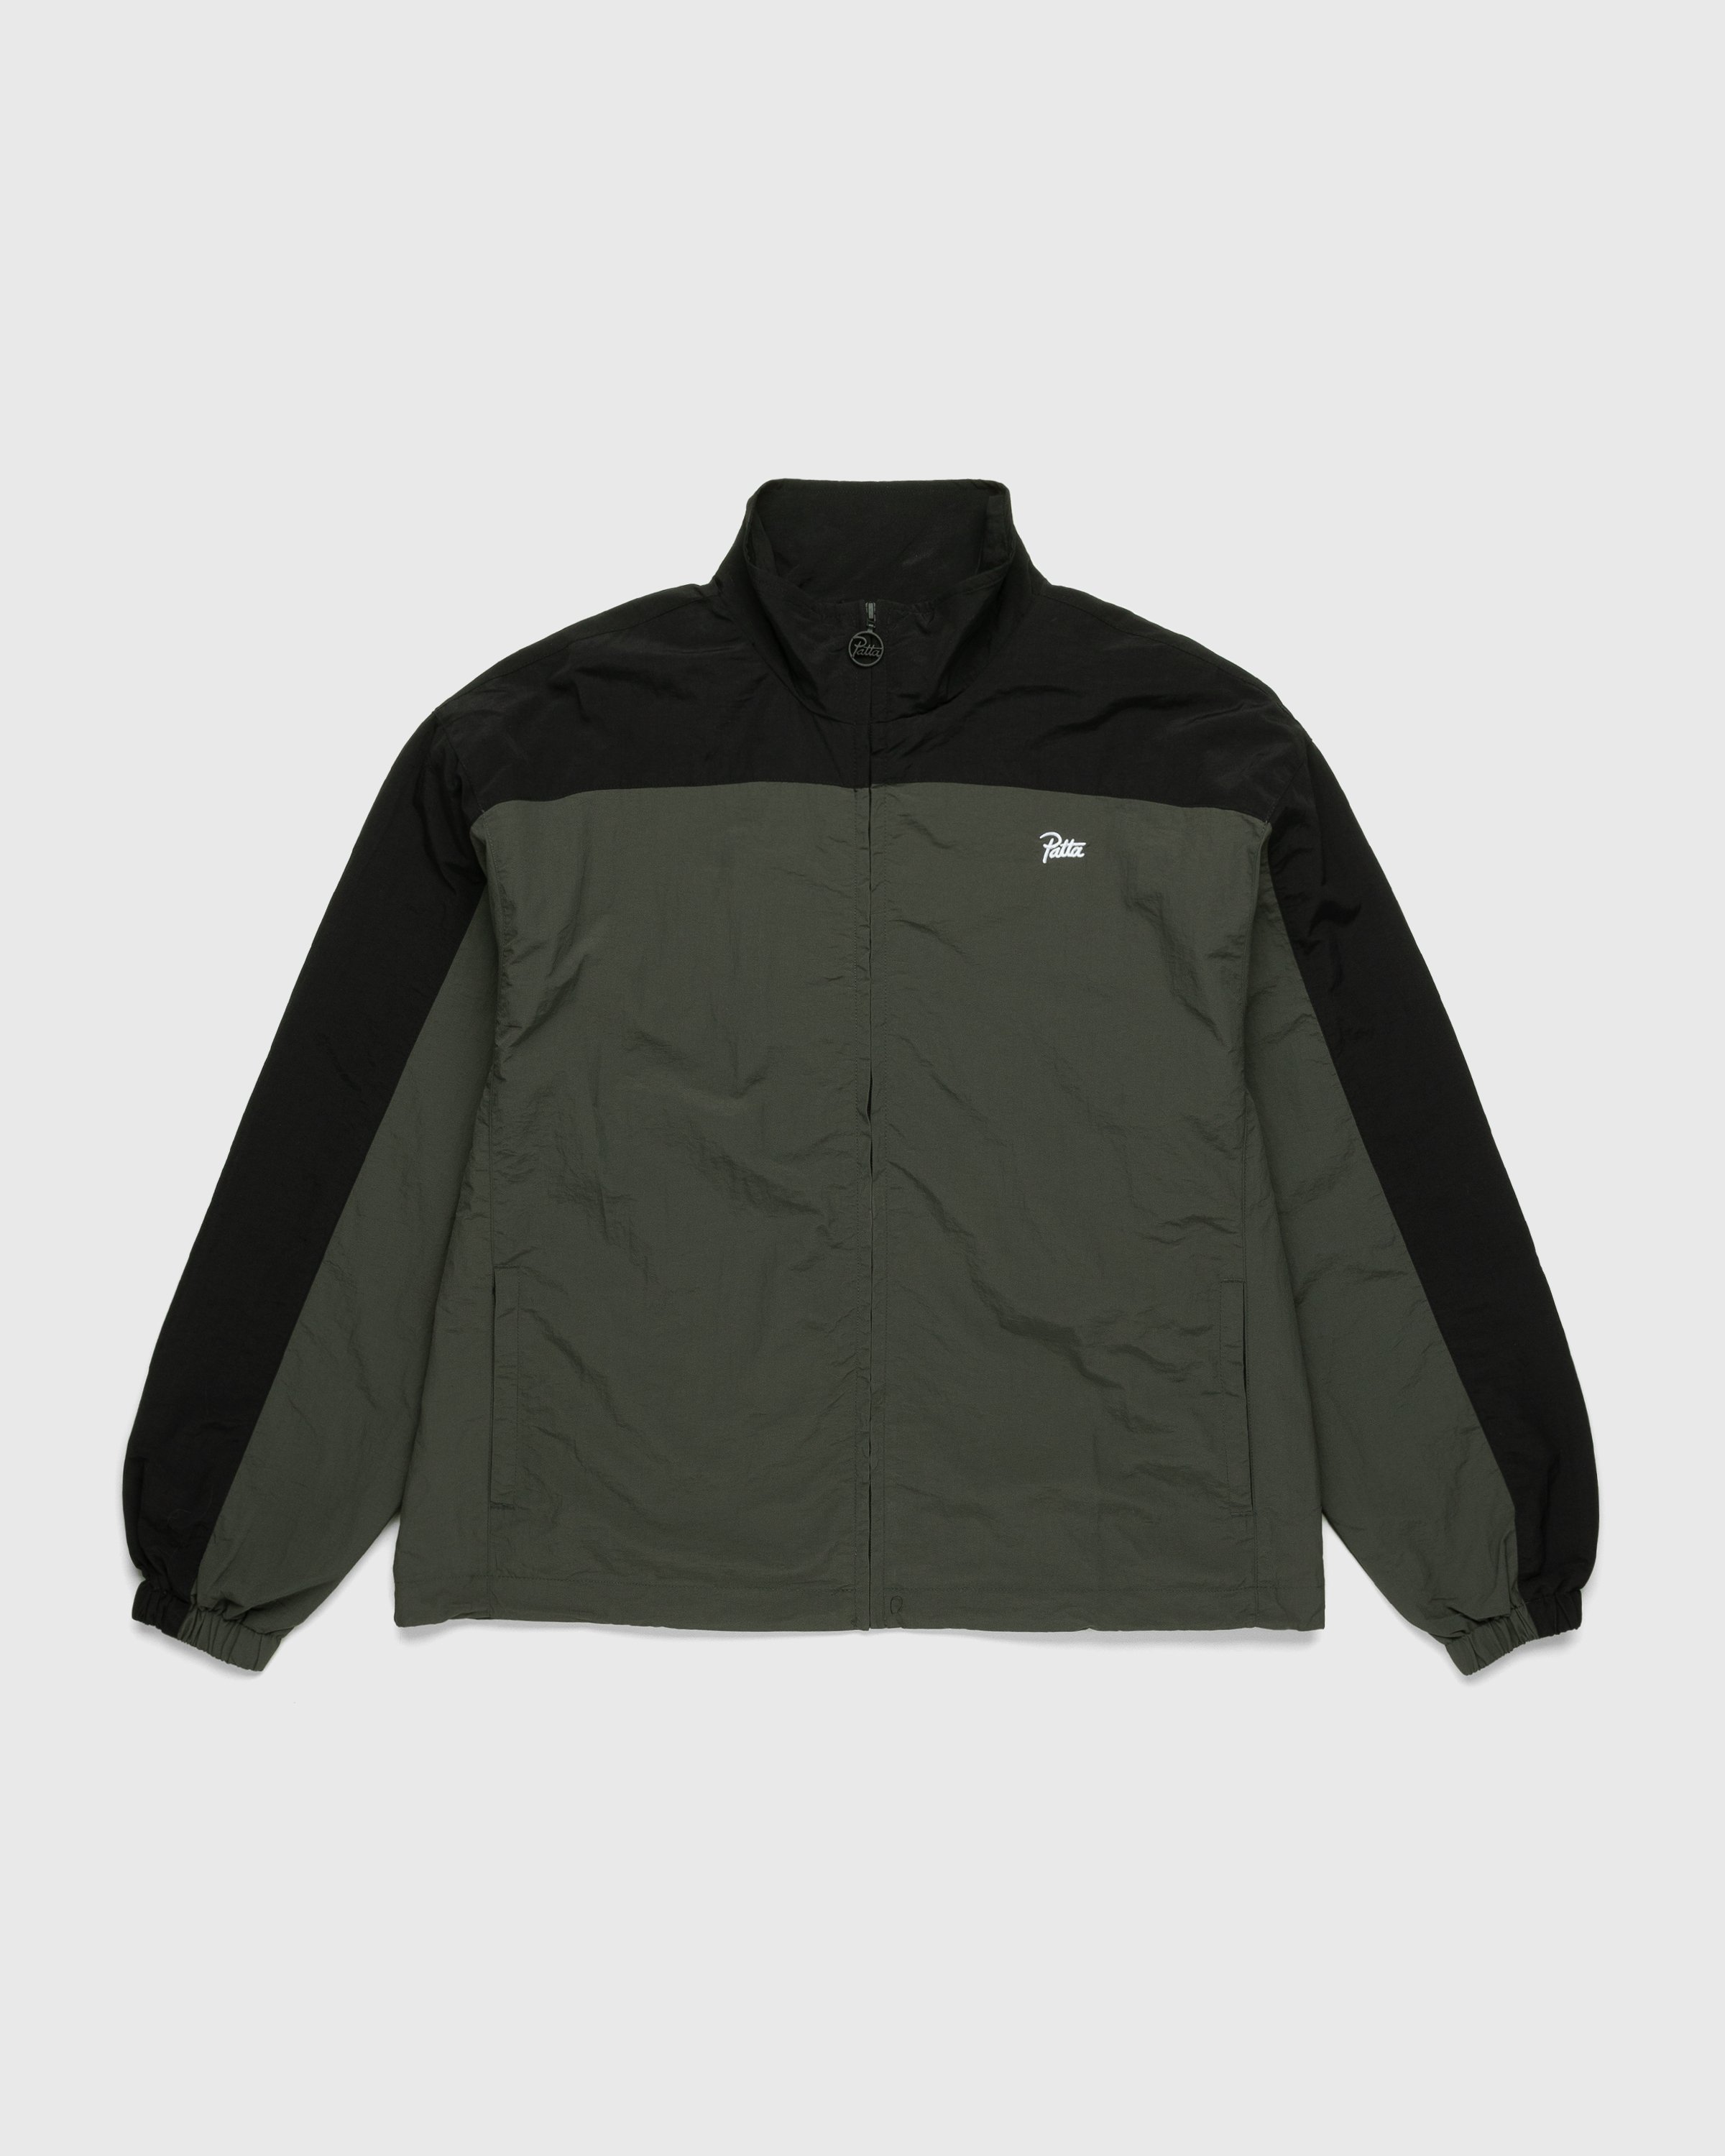 Patta – Athletic Track Jacket Black/Charcoal Grey | Highsnobiety Shop